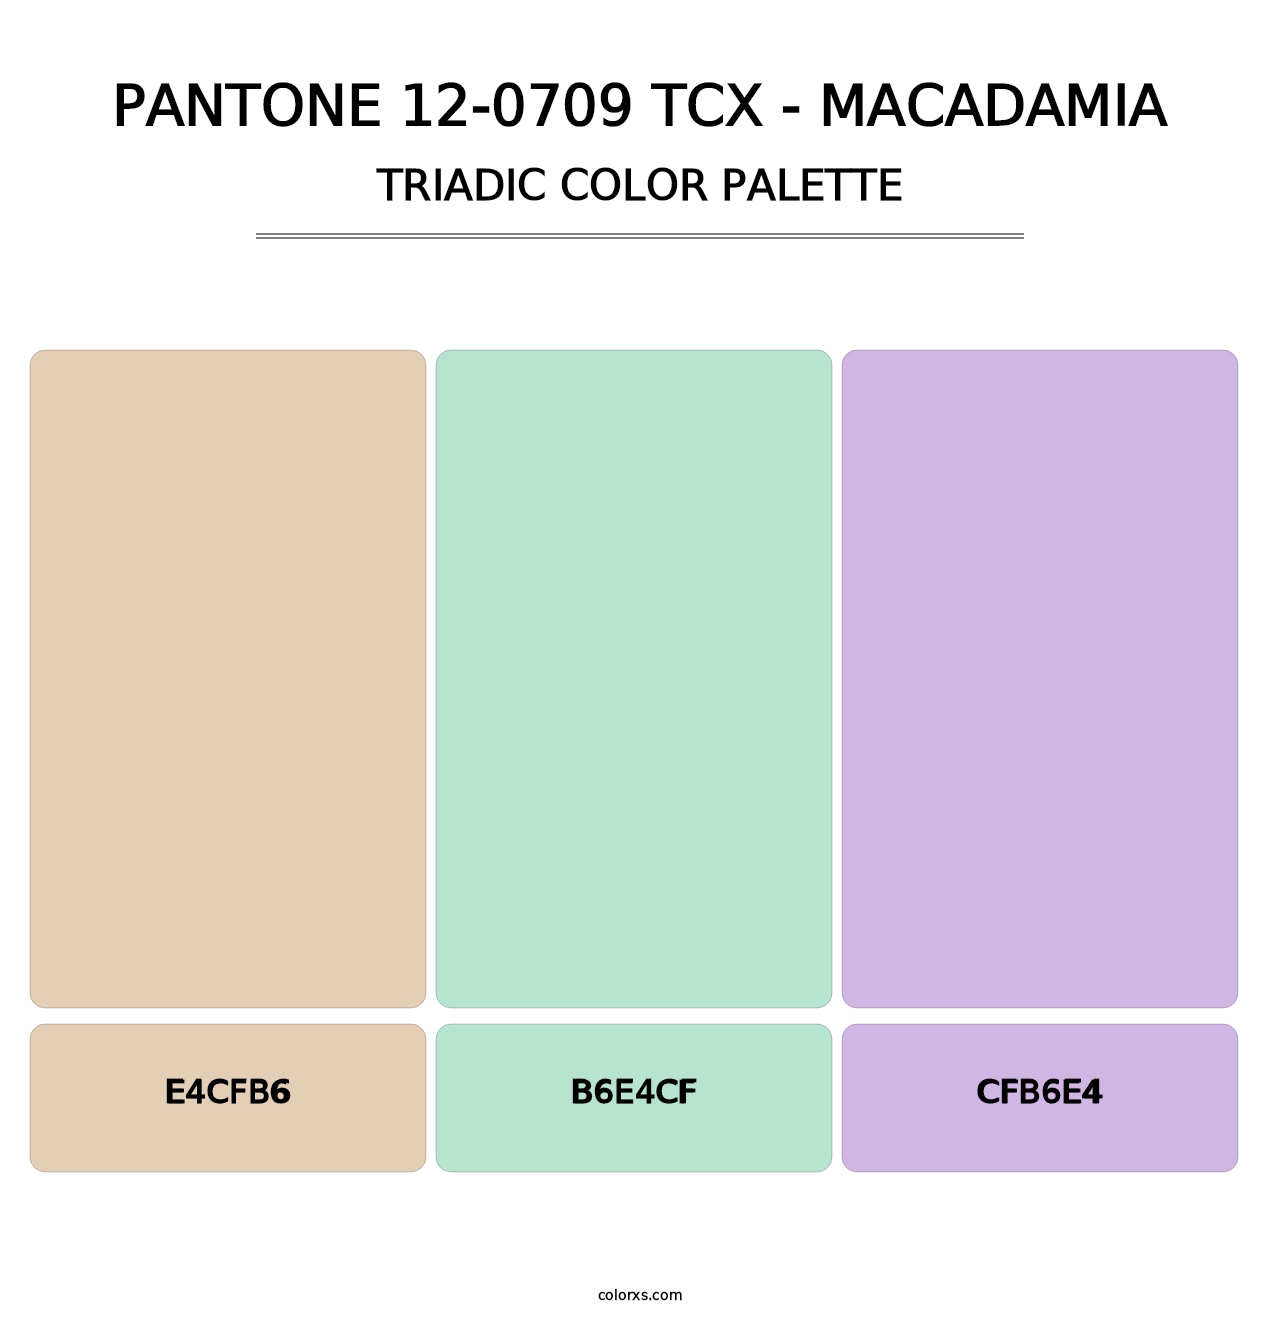 PANTONE 12-0709 TCX - Macadamia - Triadic Color Palette